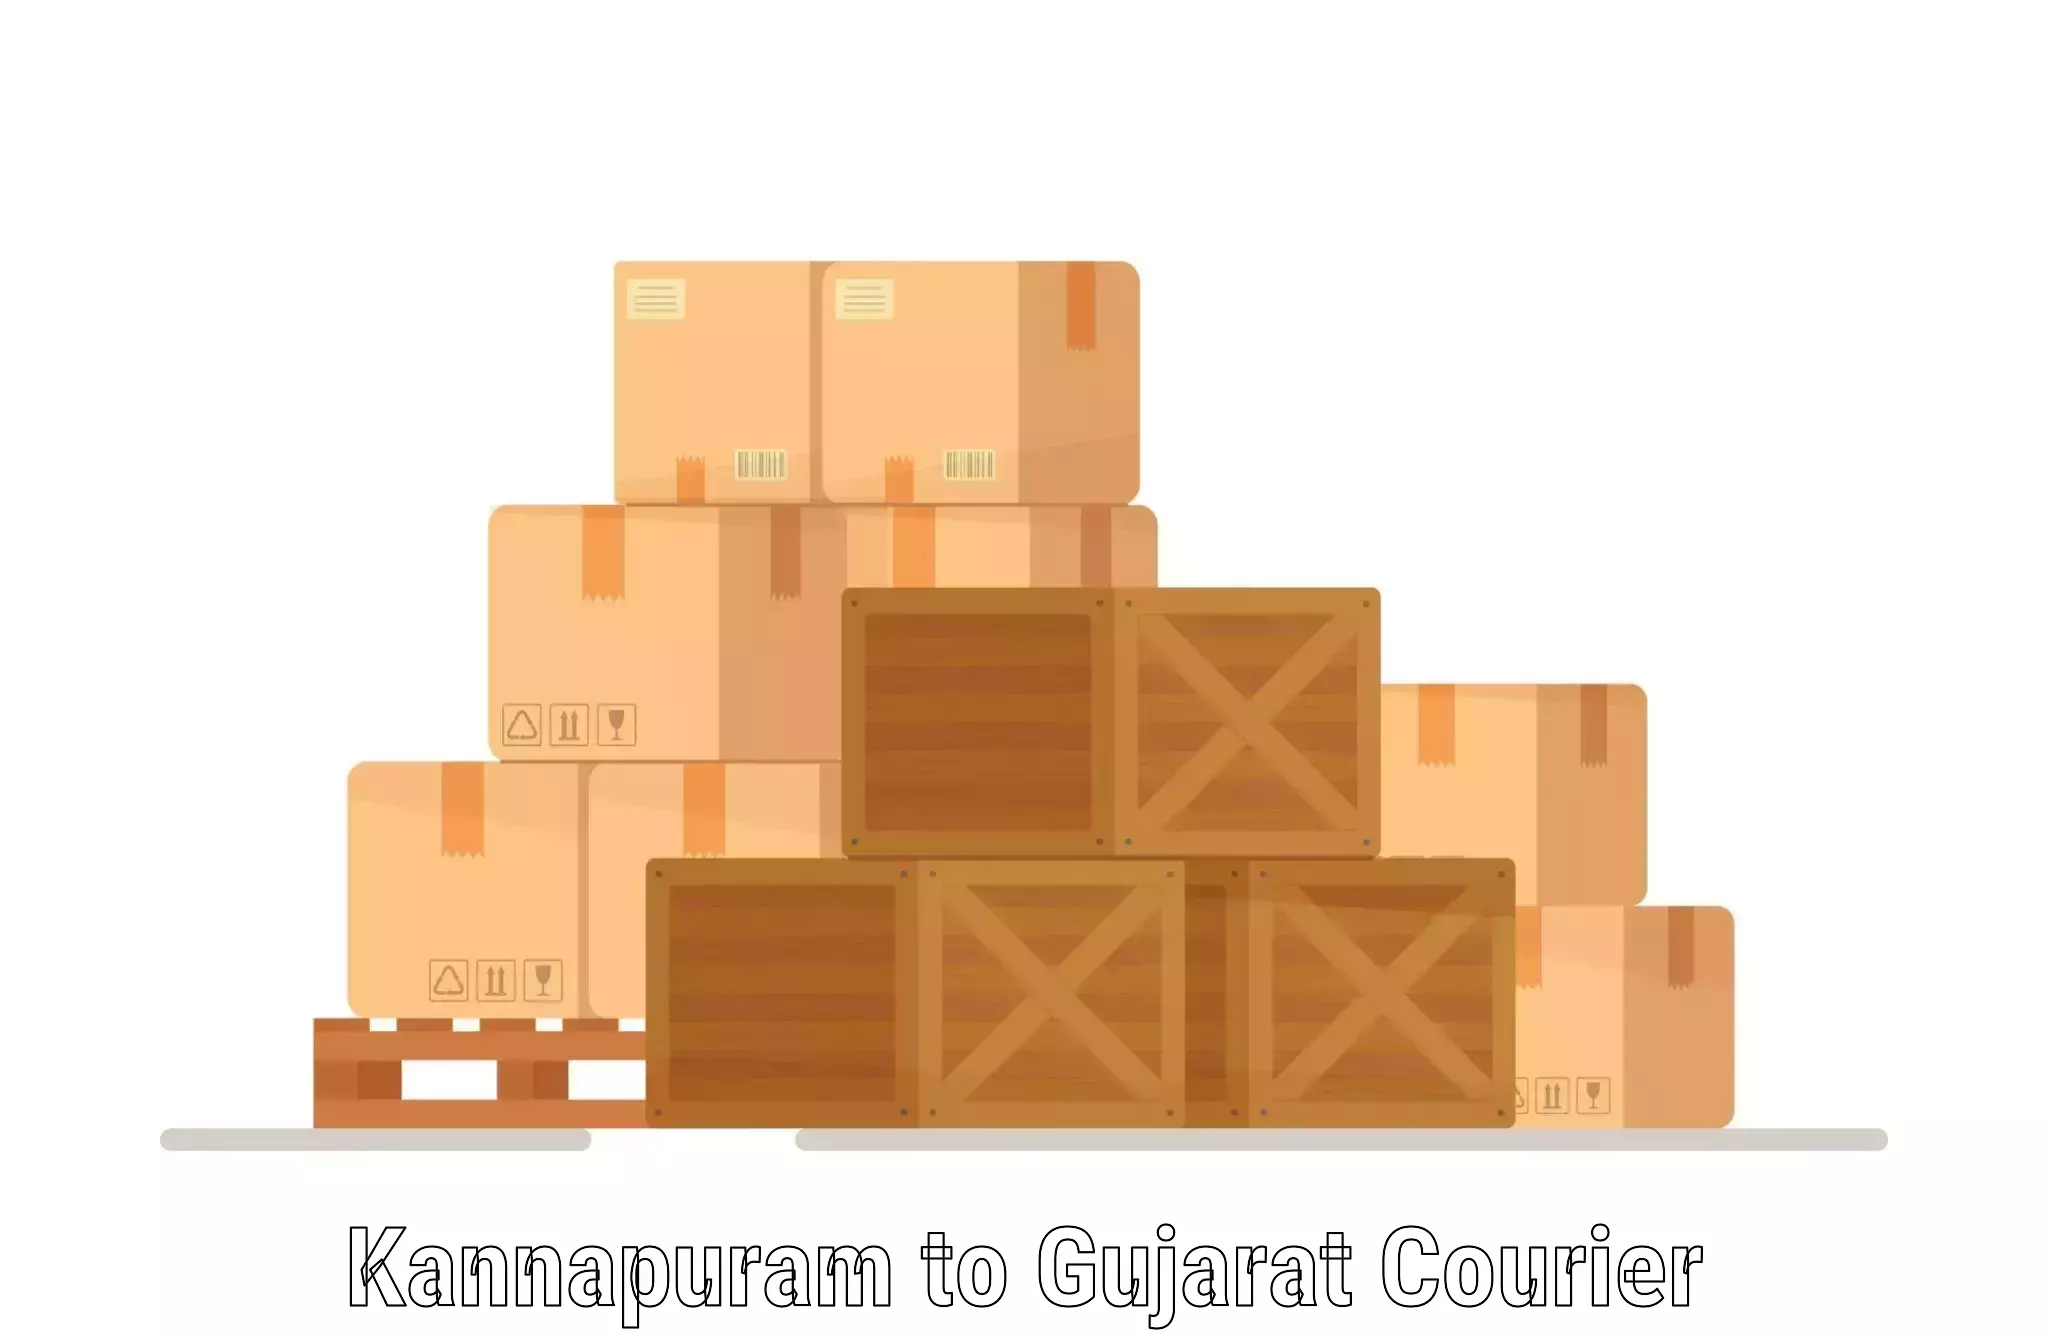 State-of-the-art courier technology Kannapuram to Gujarat